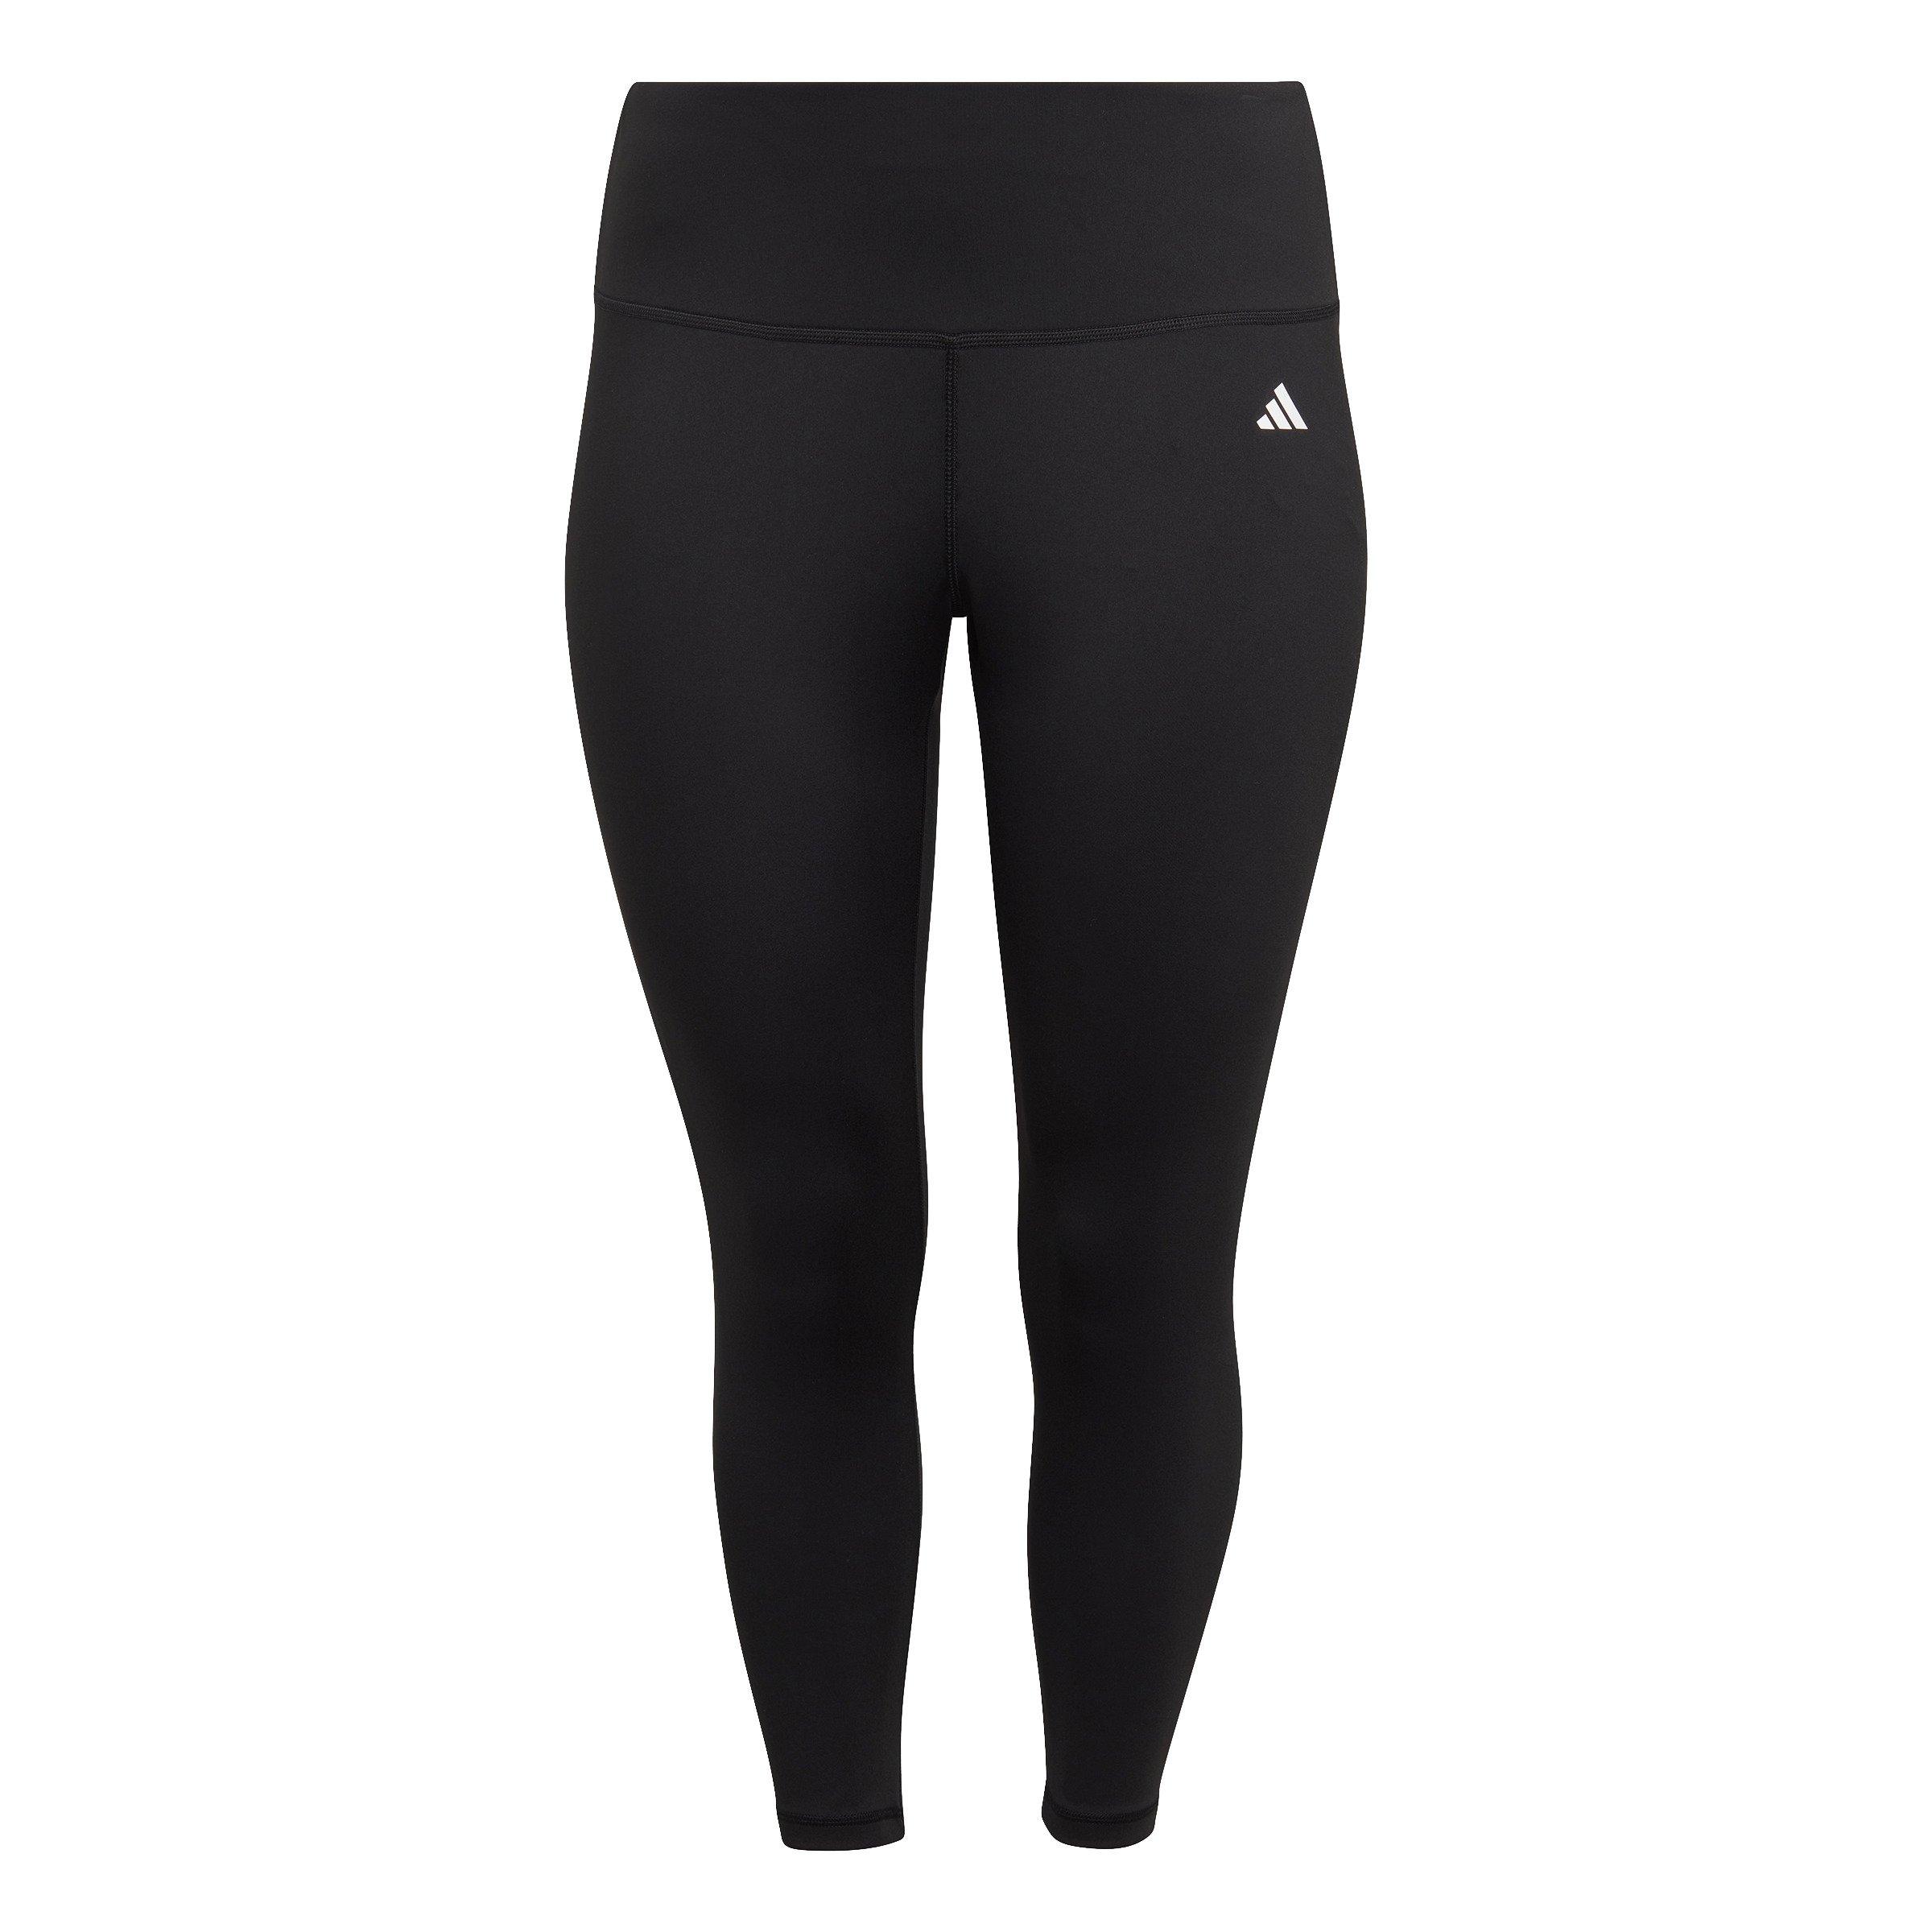 Adidas 3 Stripes Womens Black Leggings Gym Yoga Running Pants size